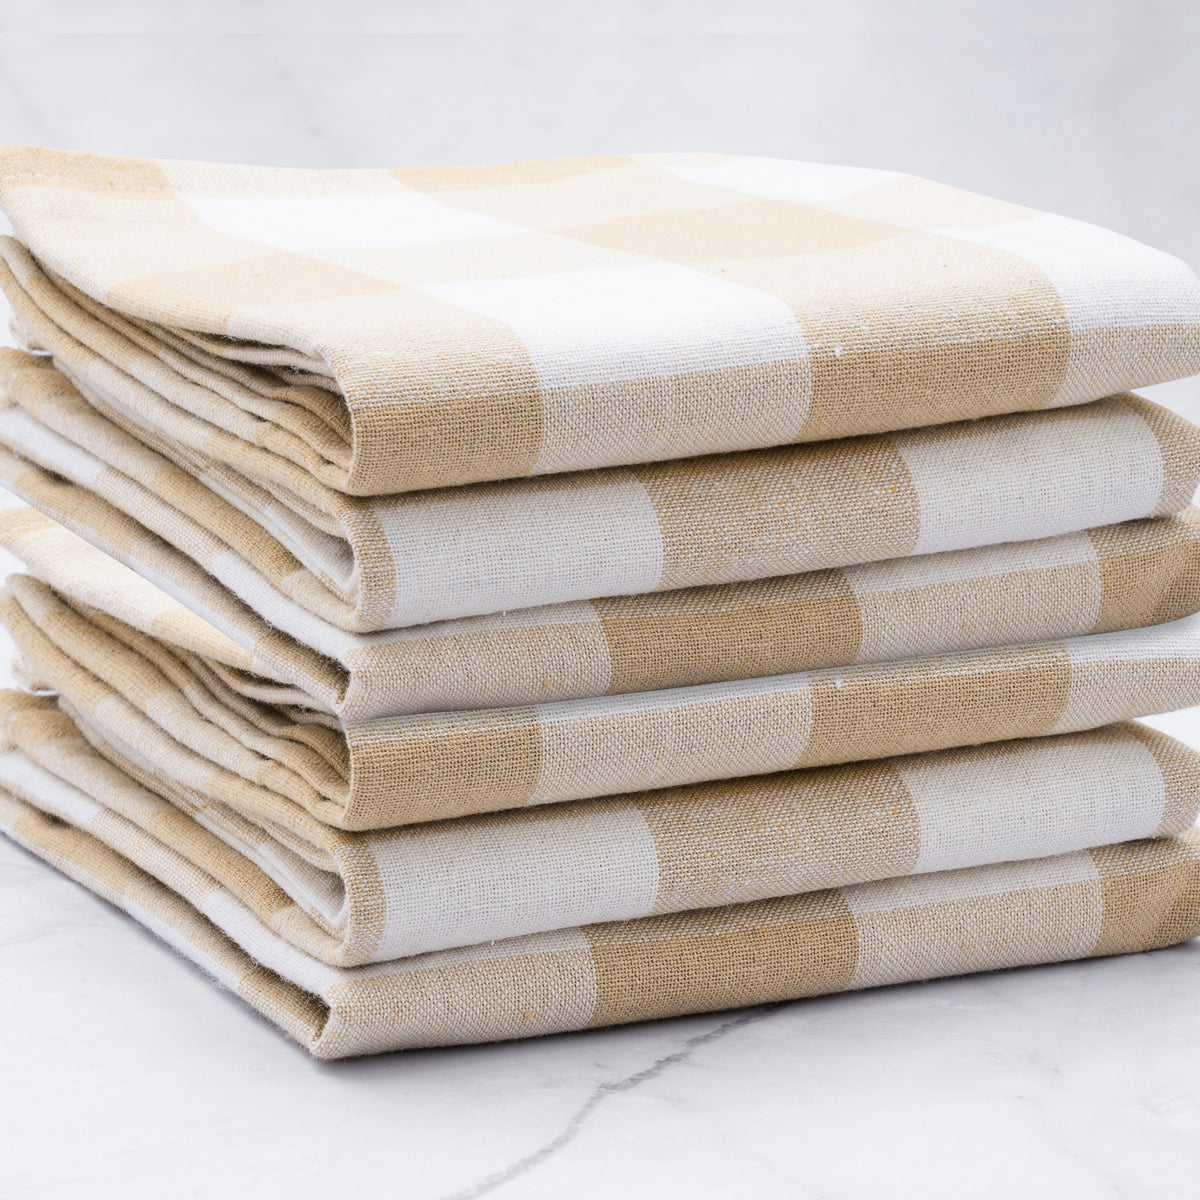 100% Cotton Waffle Weave Check Plaid Kitchen Towels, 13 x 28